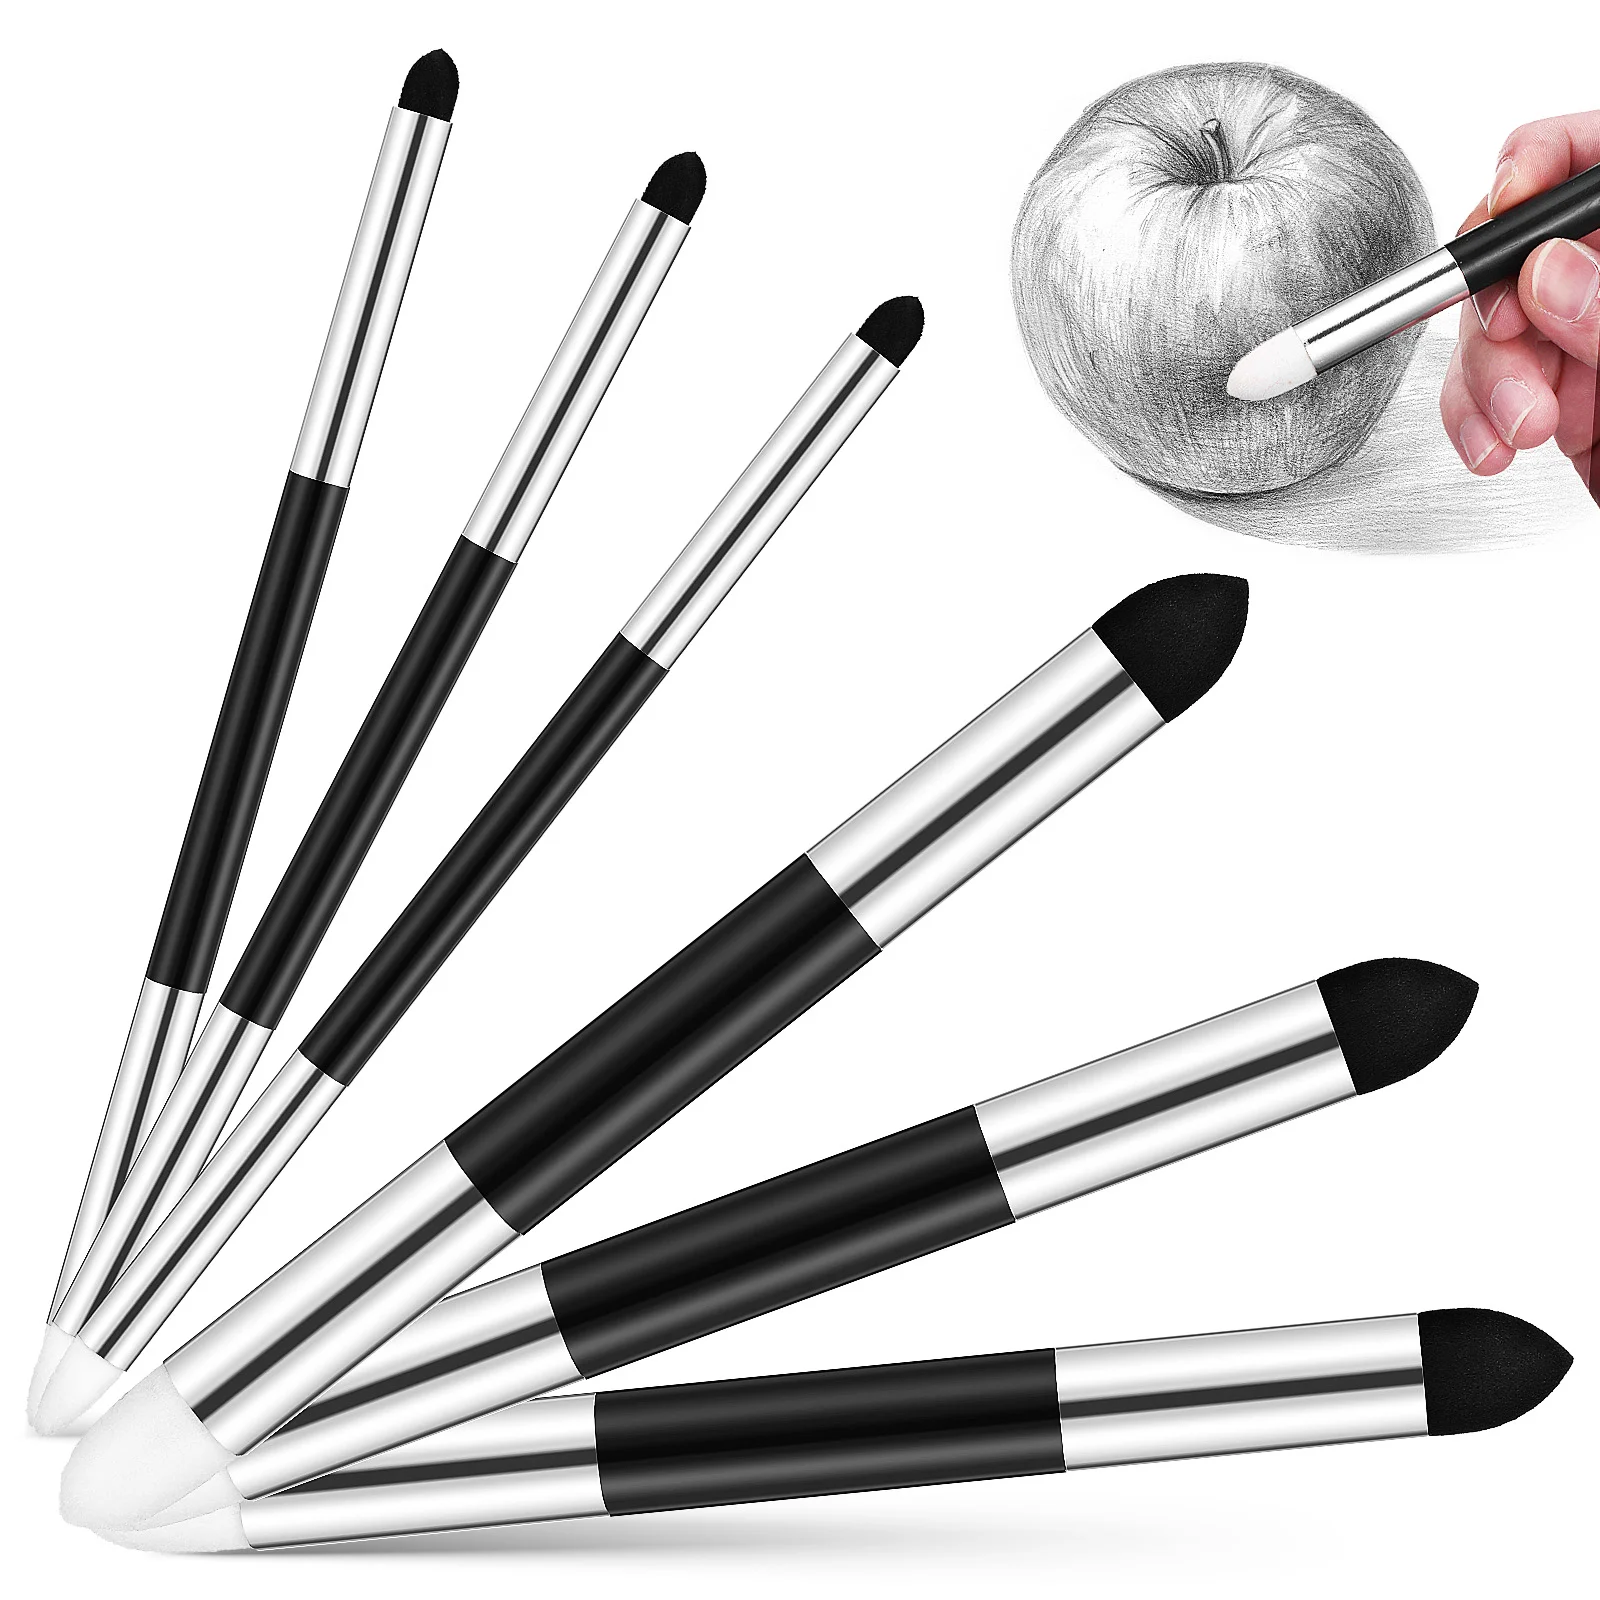 

6 Pcs Sponges Blending Eraser Pen Tools For Drawing Large Washable Paint Sticks Sketch Rubbing Brush Blenders